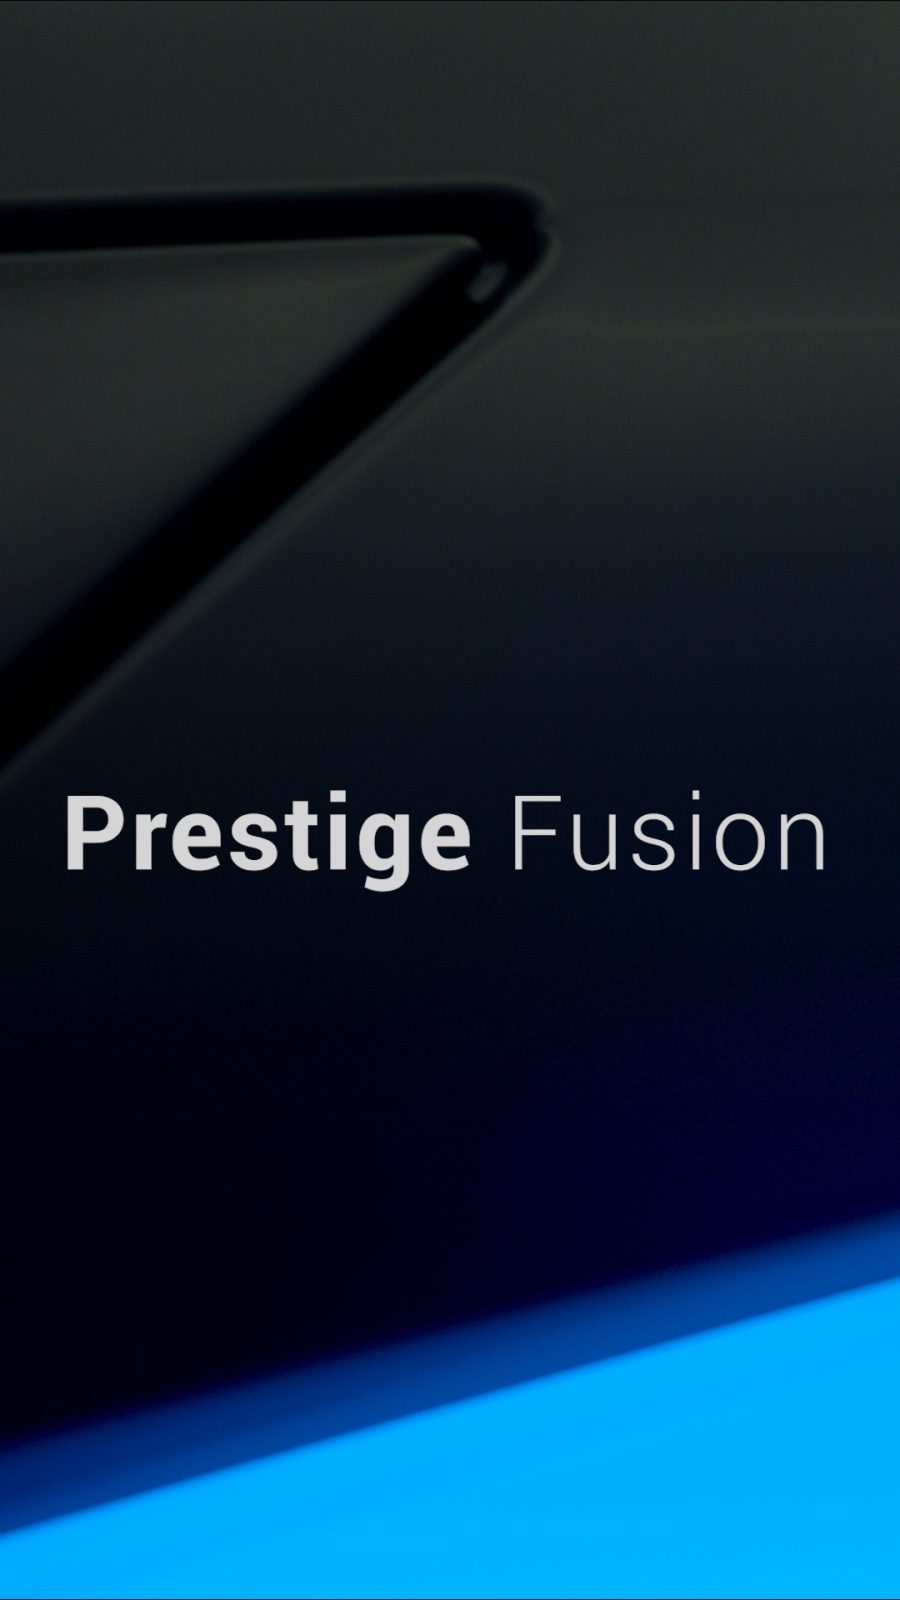 Prestige Fusion Trailer 2 (vertikal)